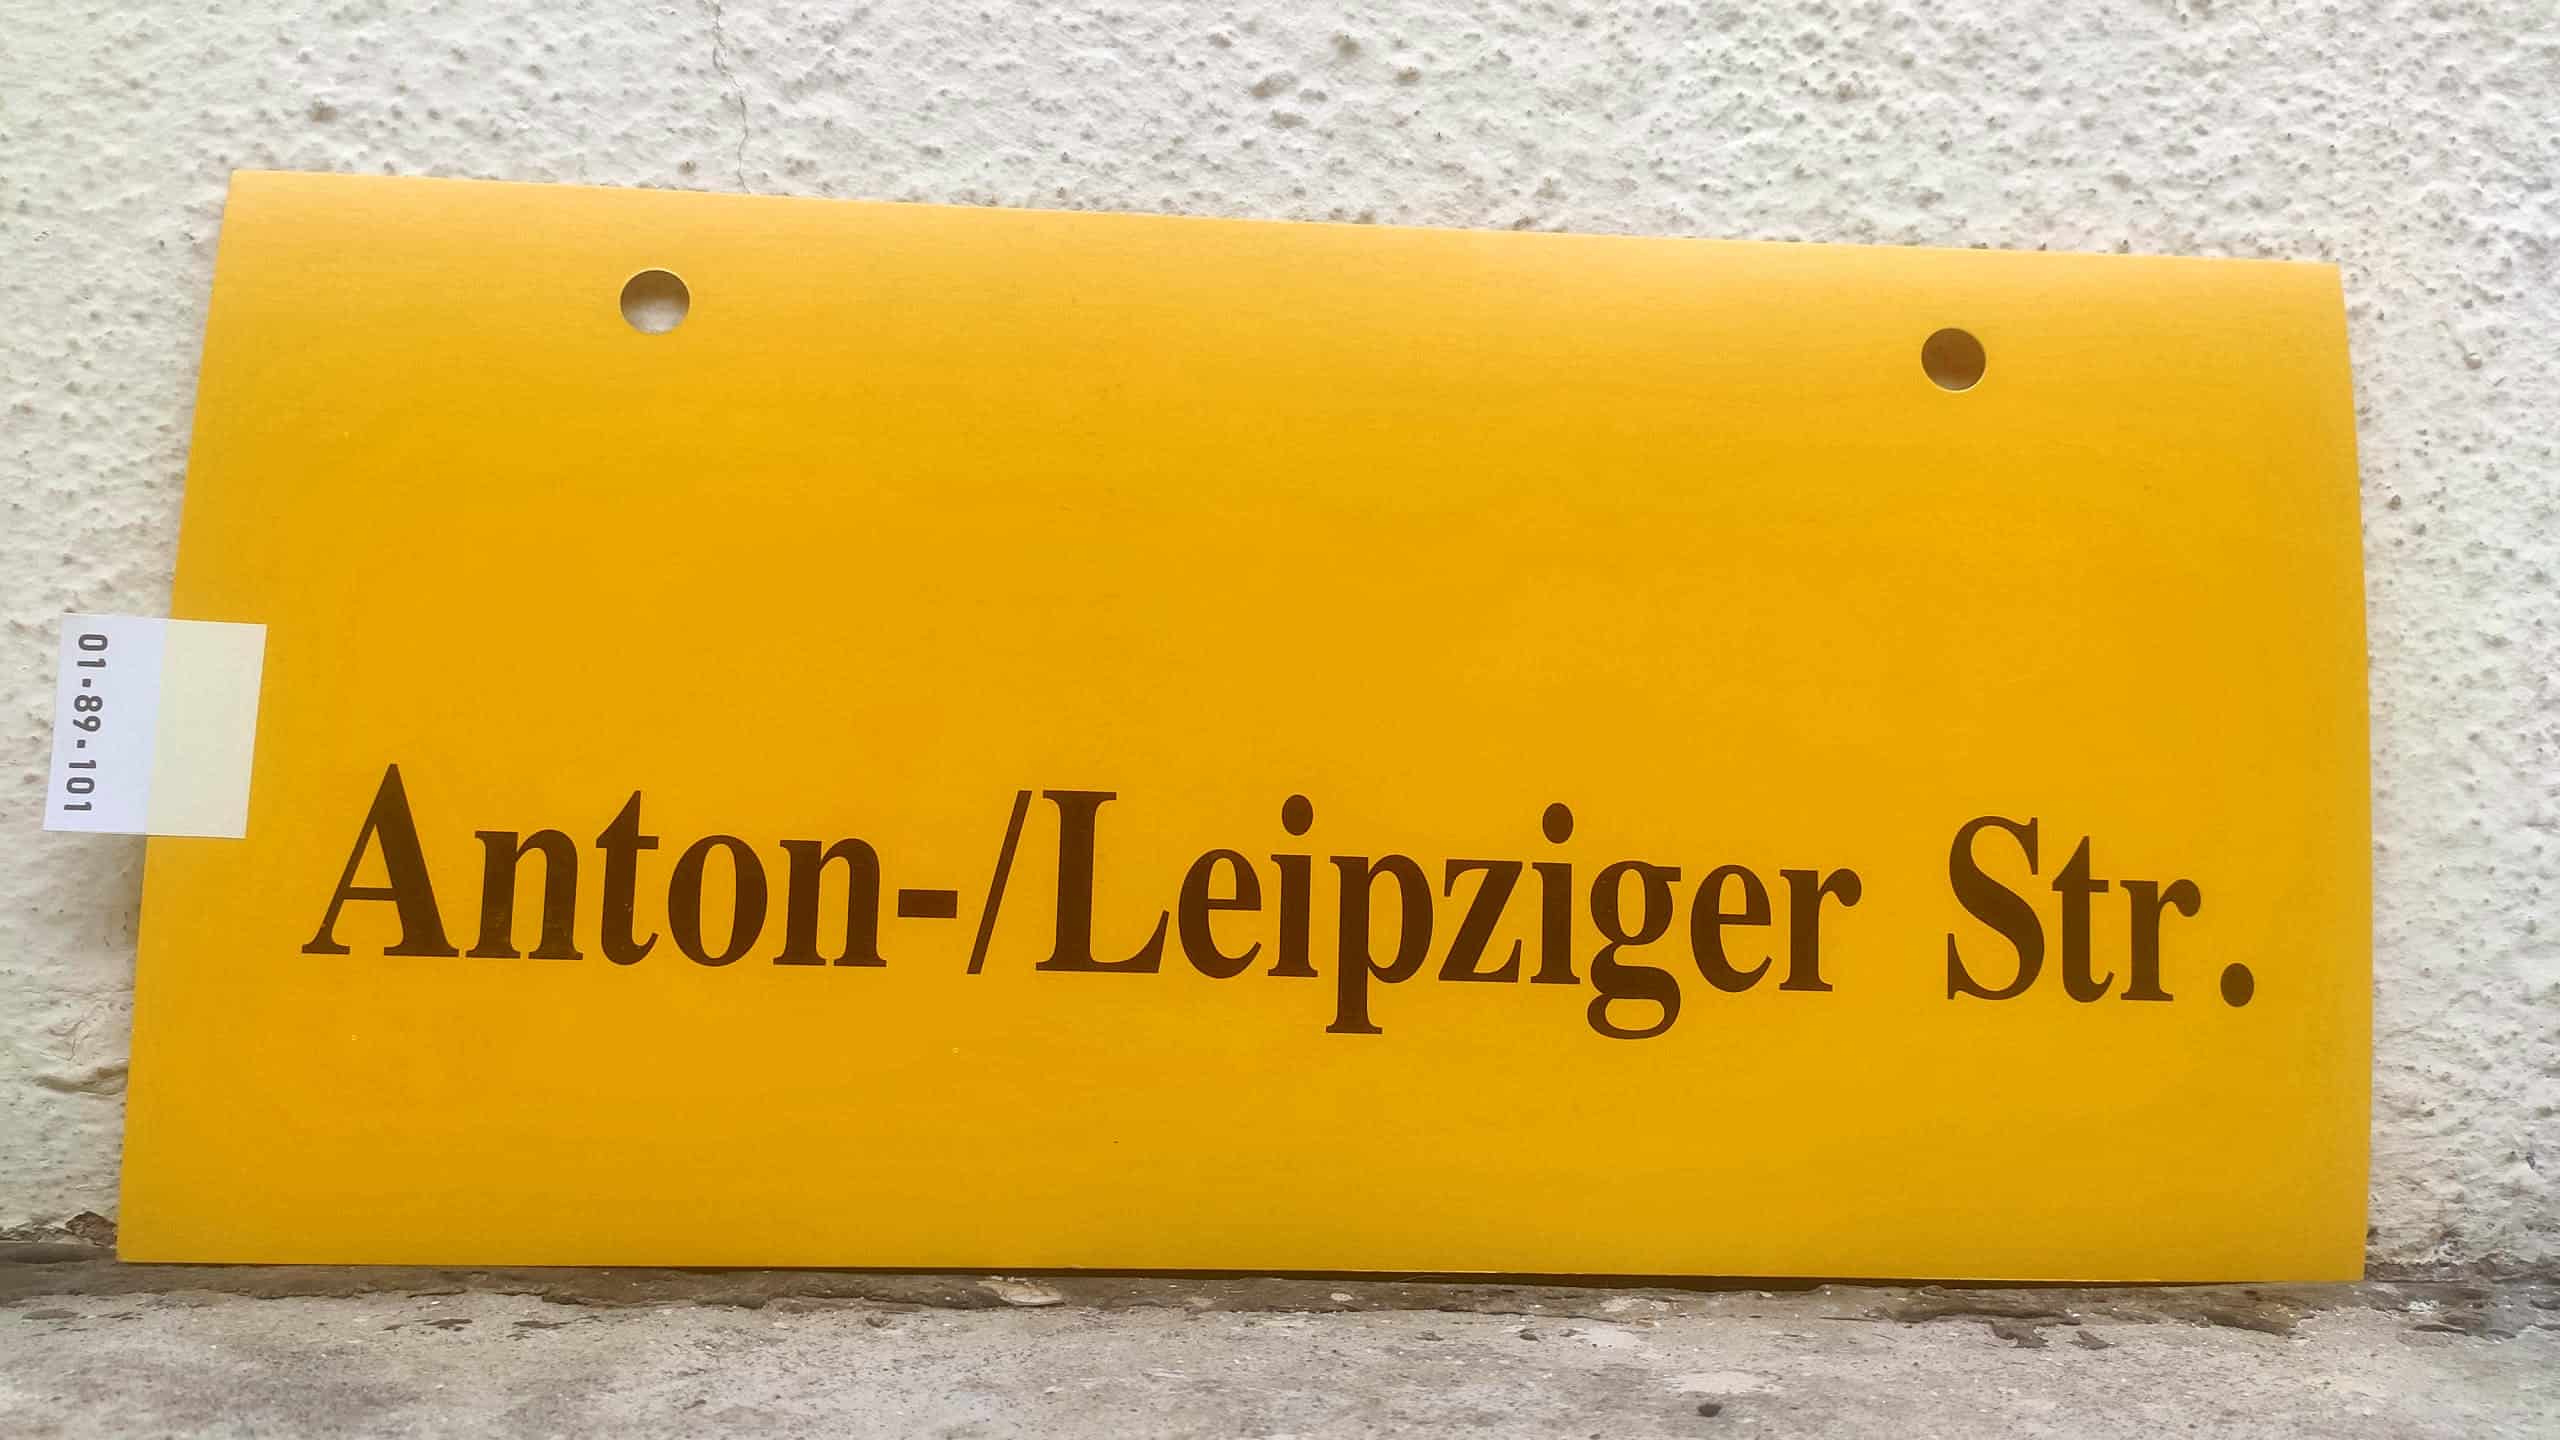 Anton-/Leipziger Str.